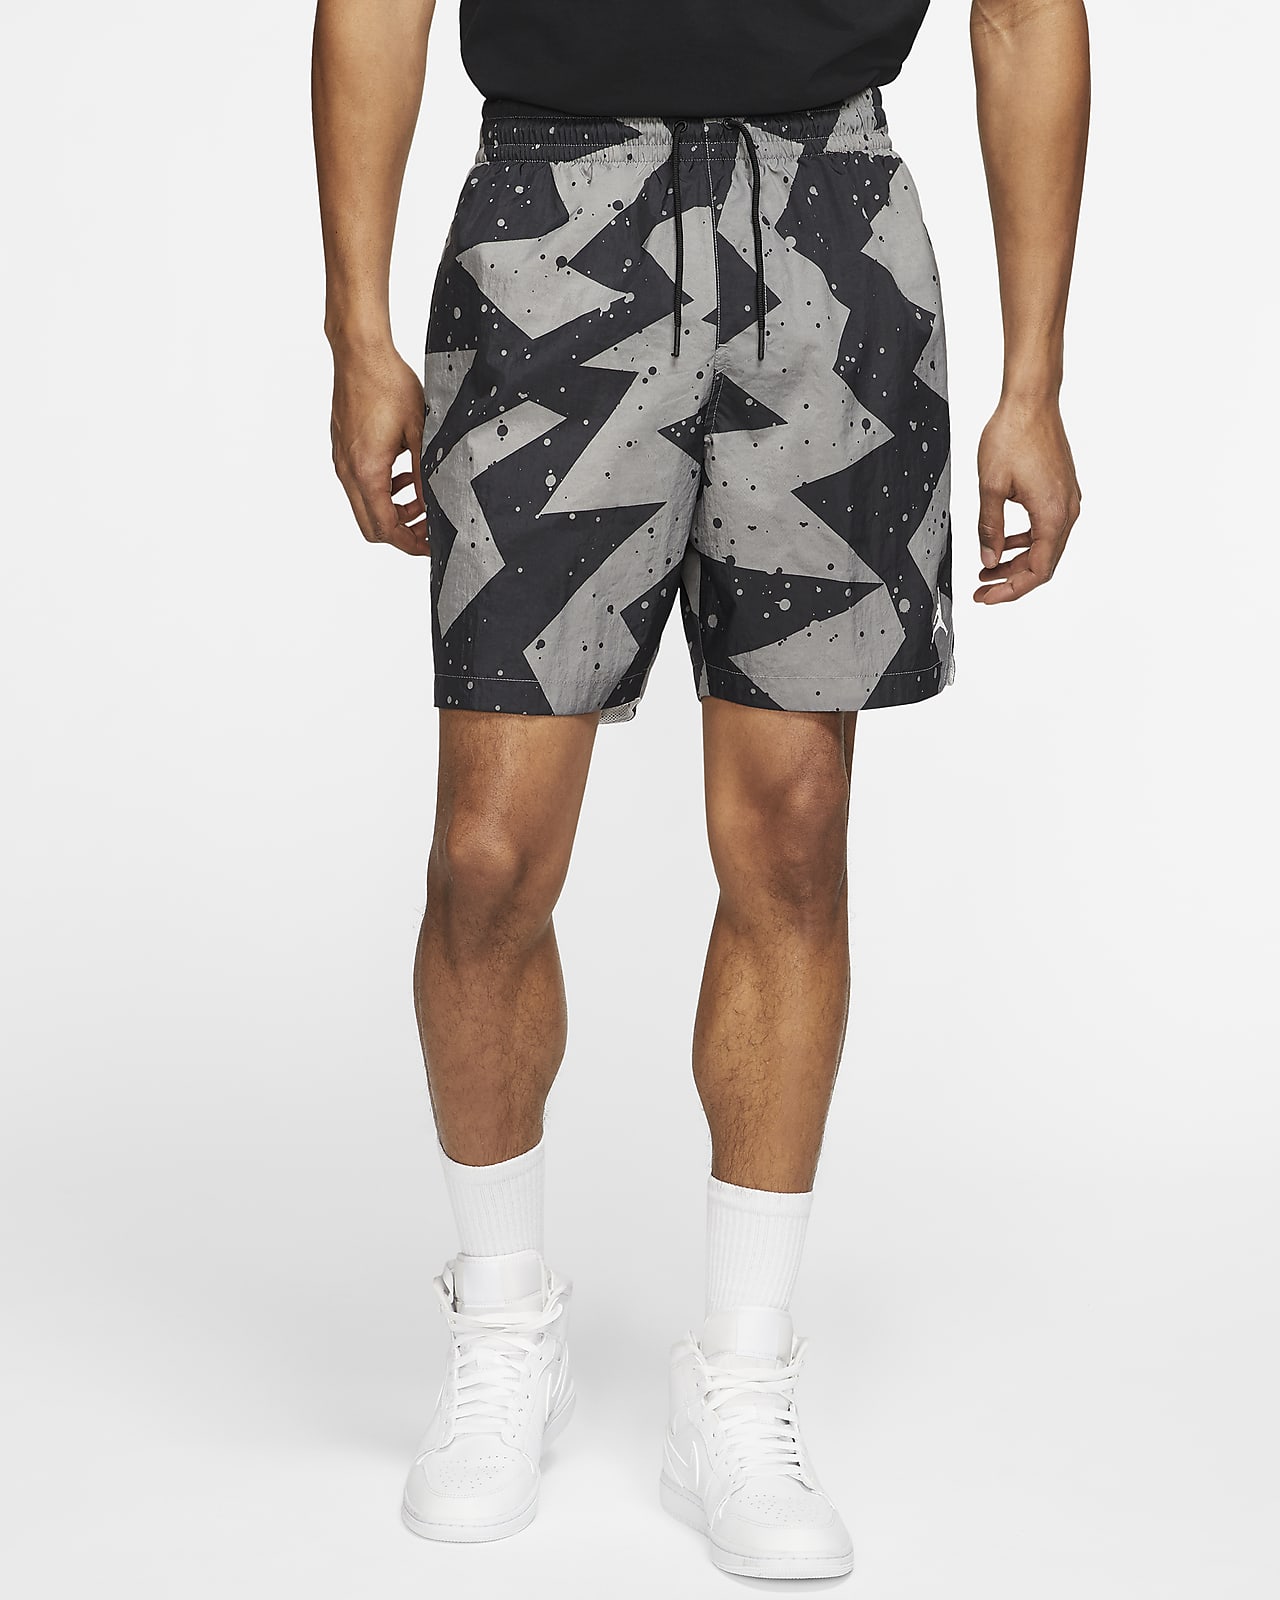 18cm (approx.) Shorts. Nike SE